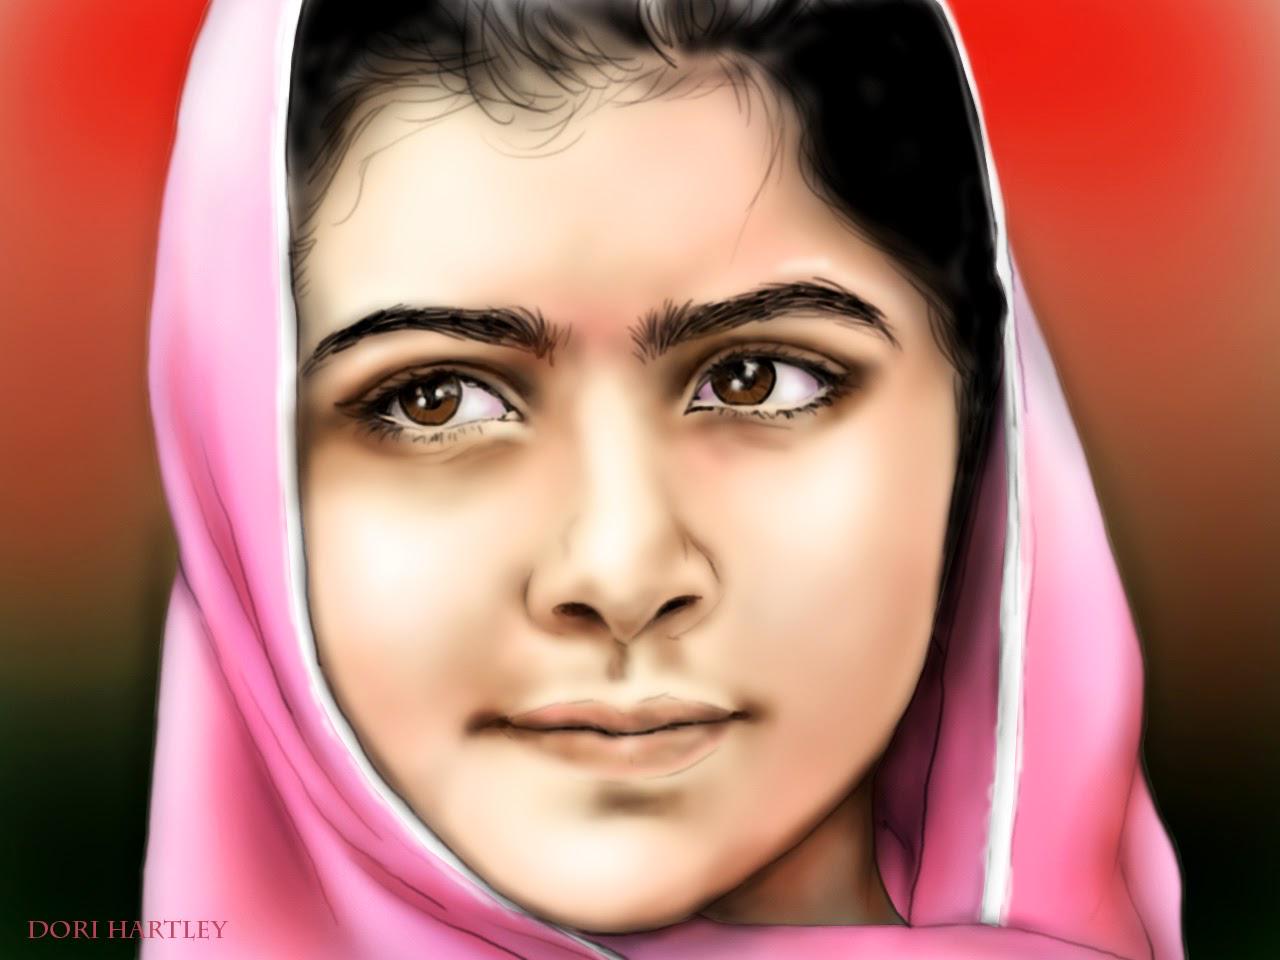 Happy Birthday Malala Yousafzai.
We are proud of you. 